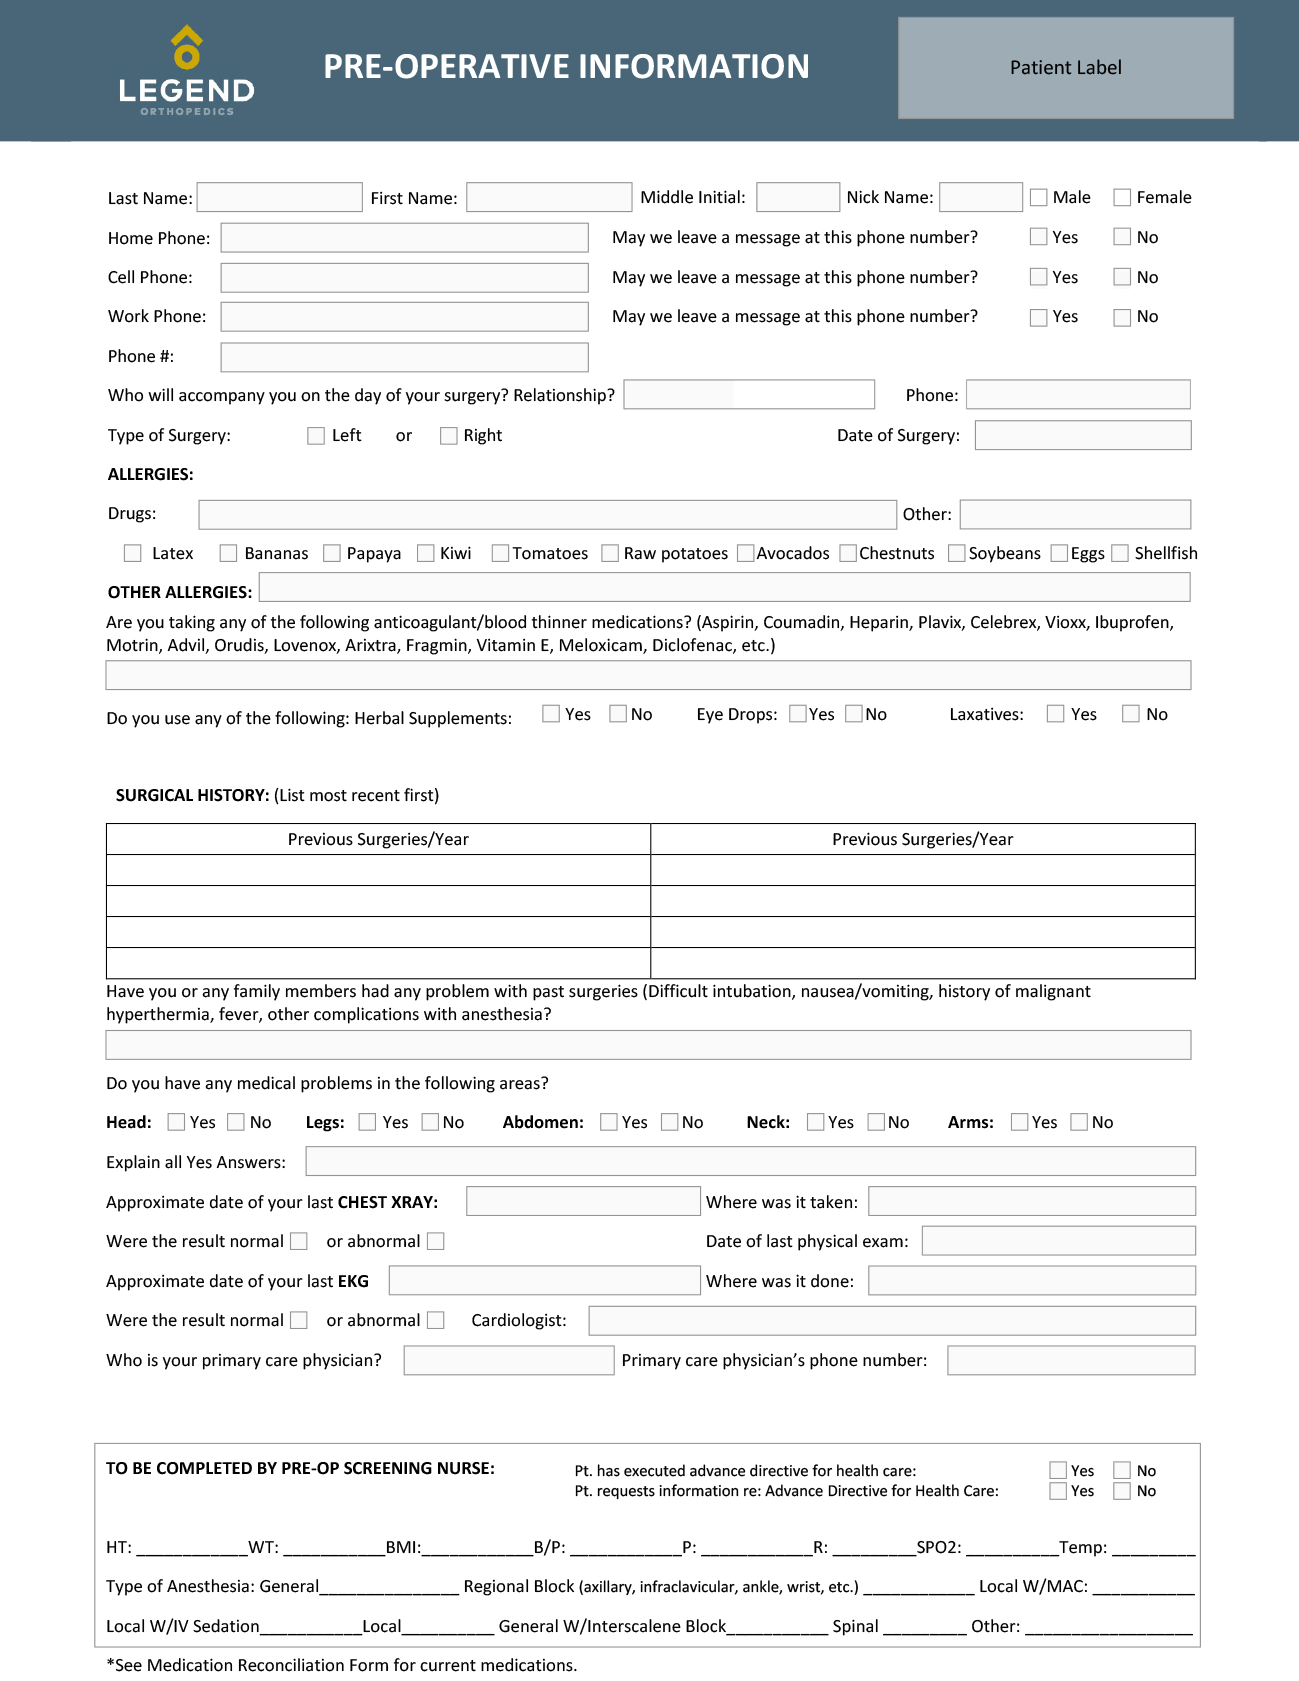 Pre-operative Information Form